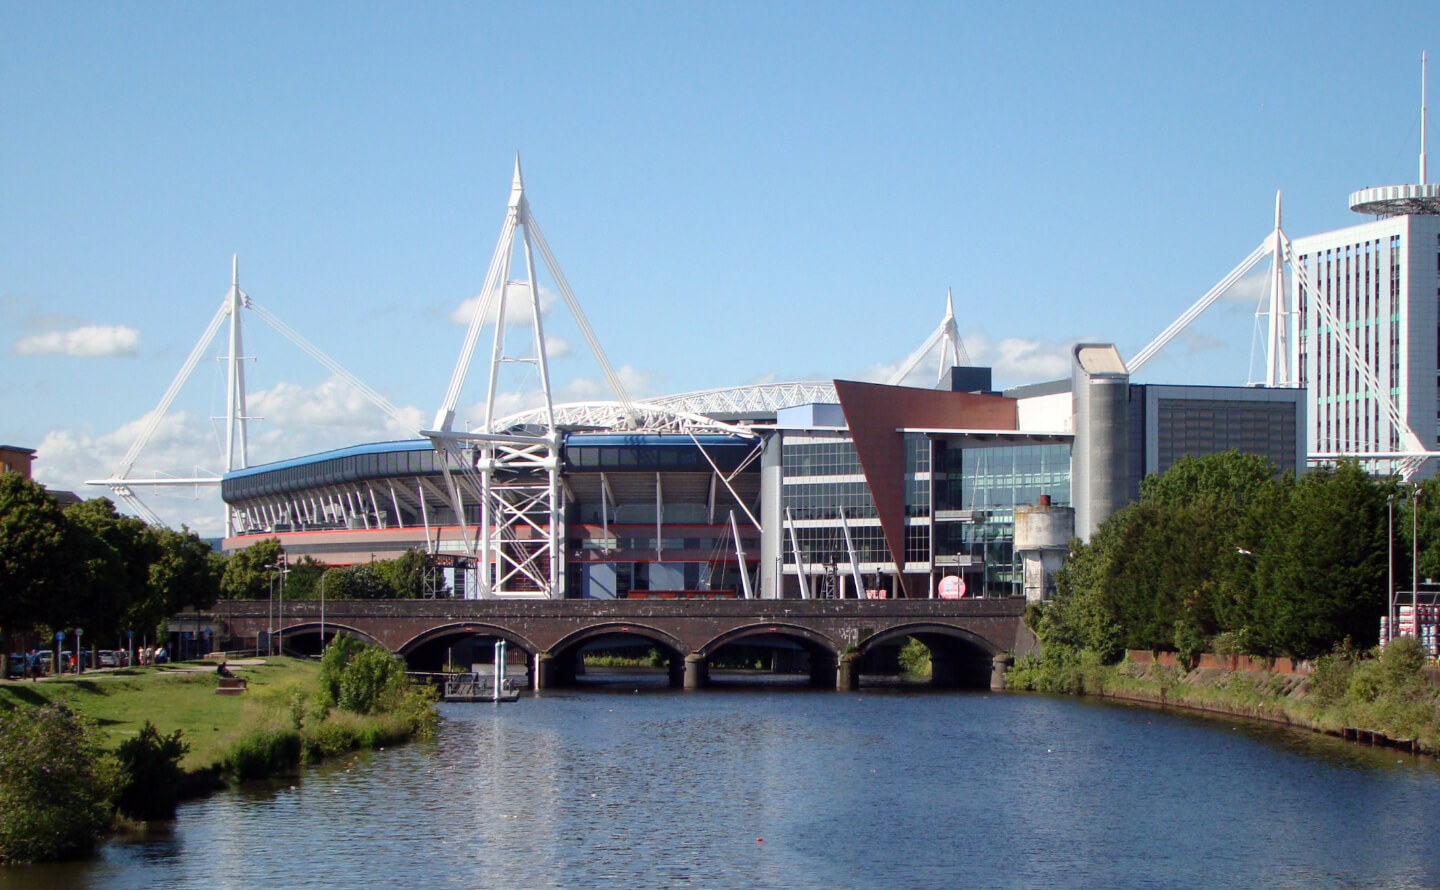 Student Accommodation in Cardiff City Centre, Cardiff - the Millenium Stadium